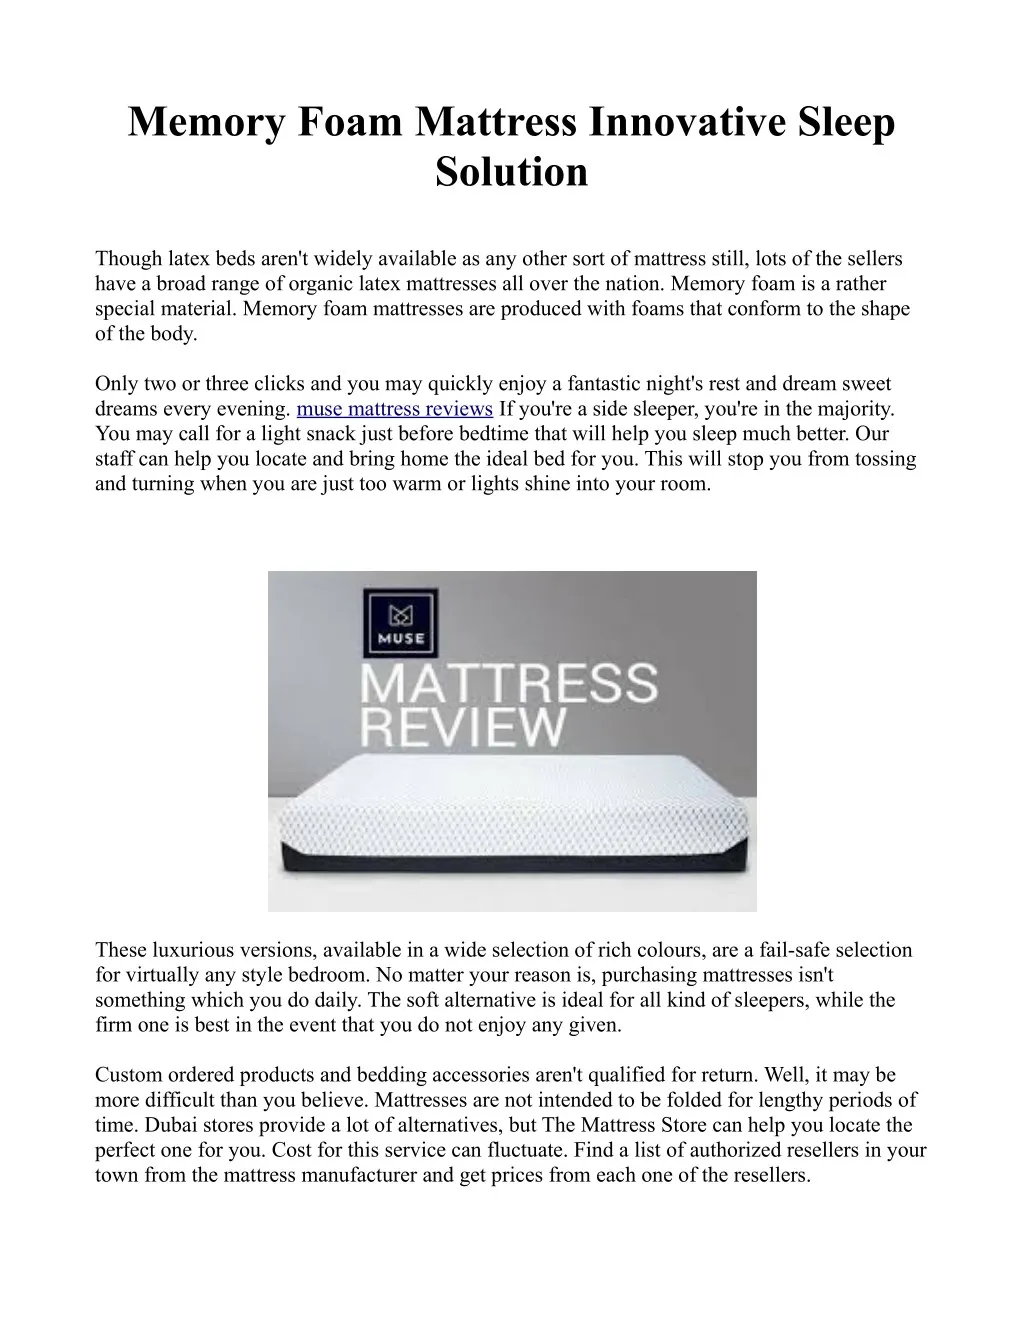 memory foam mattress innovative sleep solution